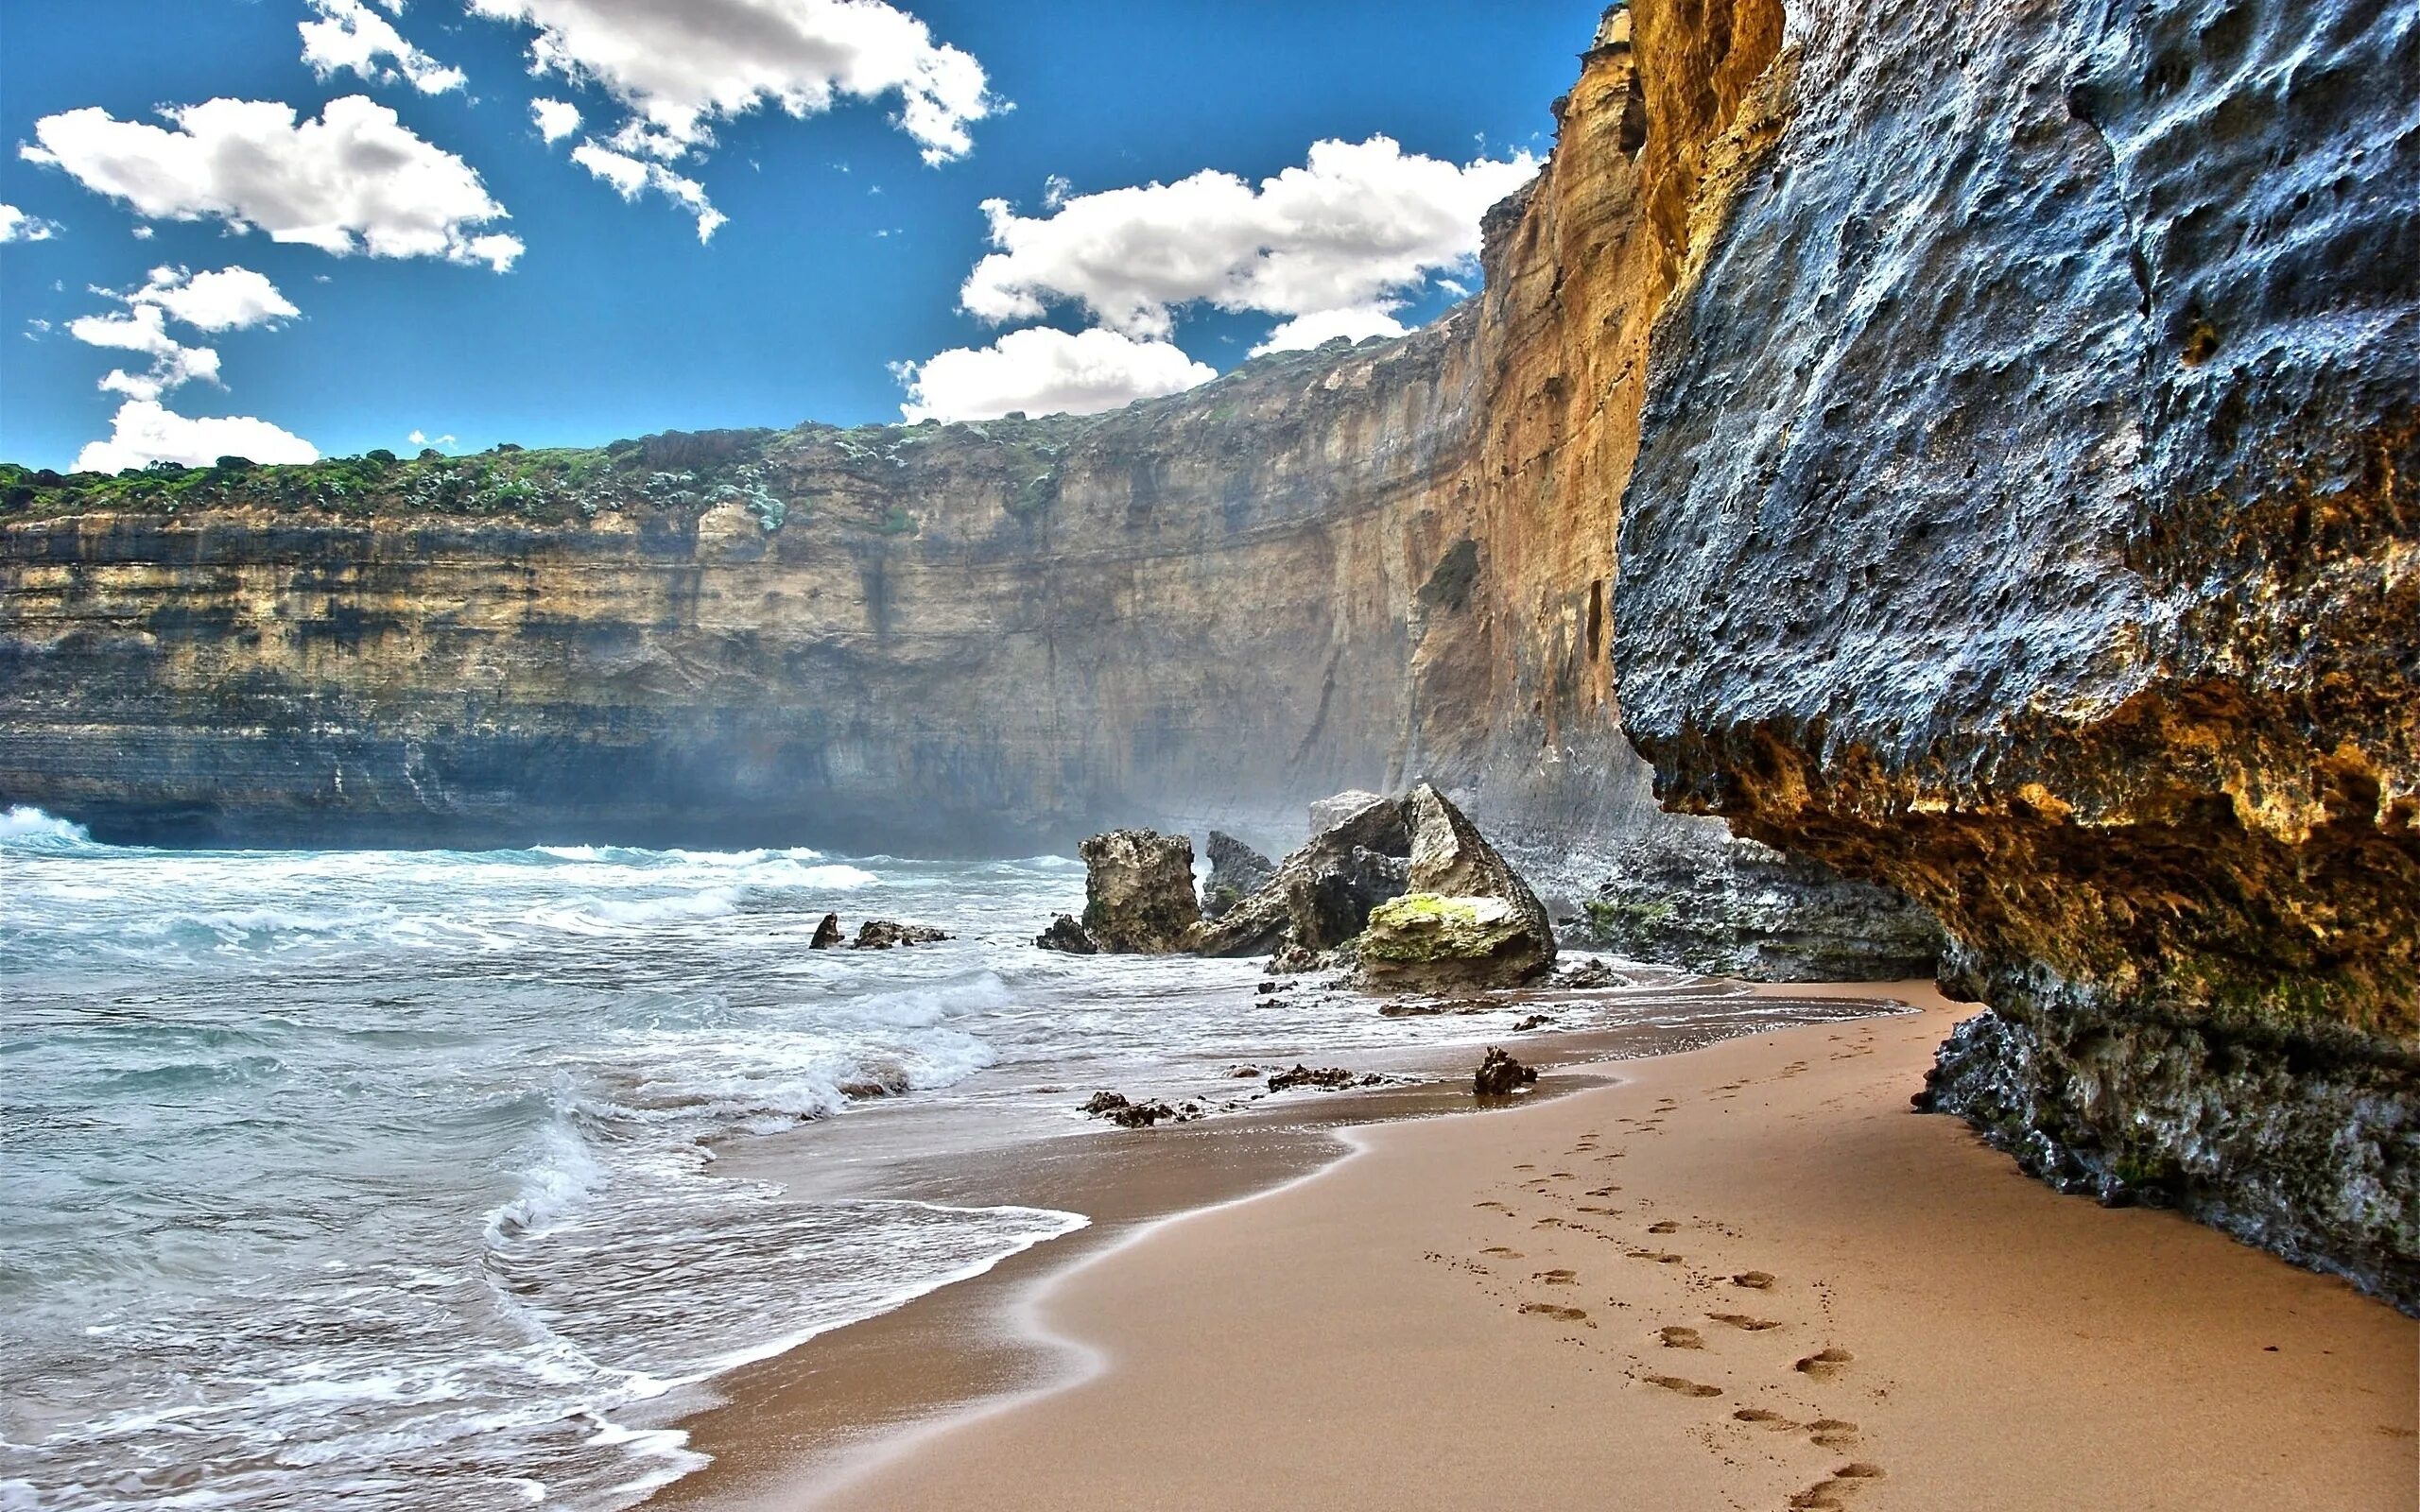 Фотообои стола. Абразия Клиф. Морская абразия. Пляж «дикий берег» ЮАР. Море скалы.